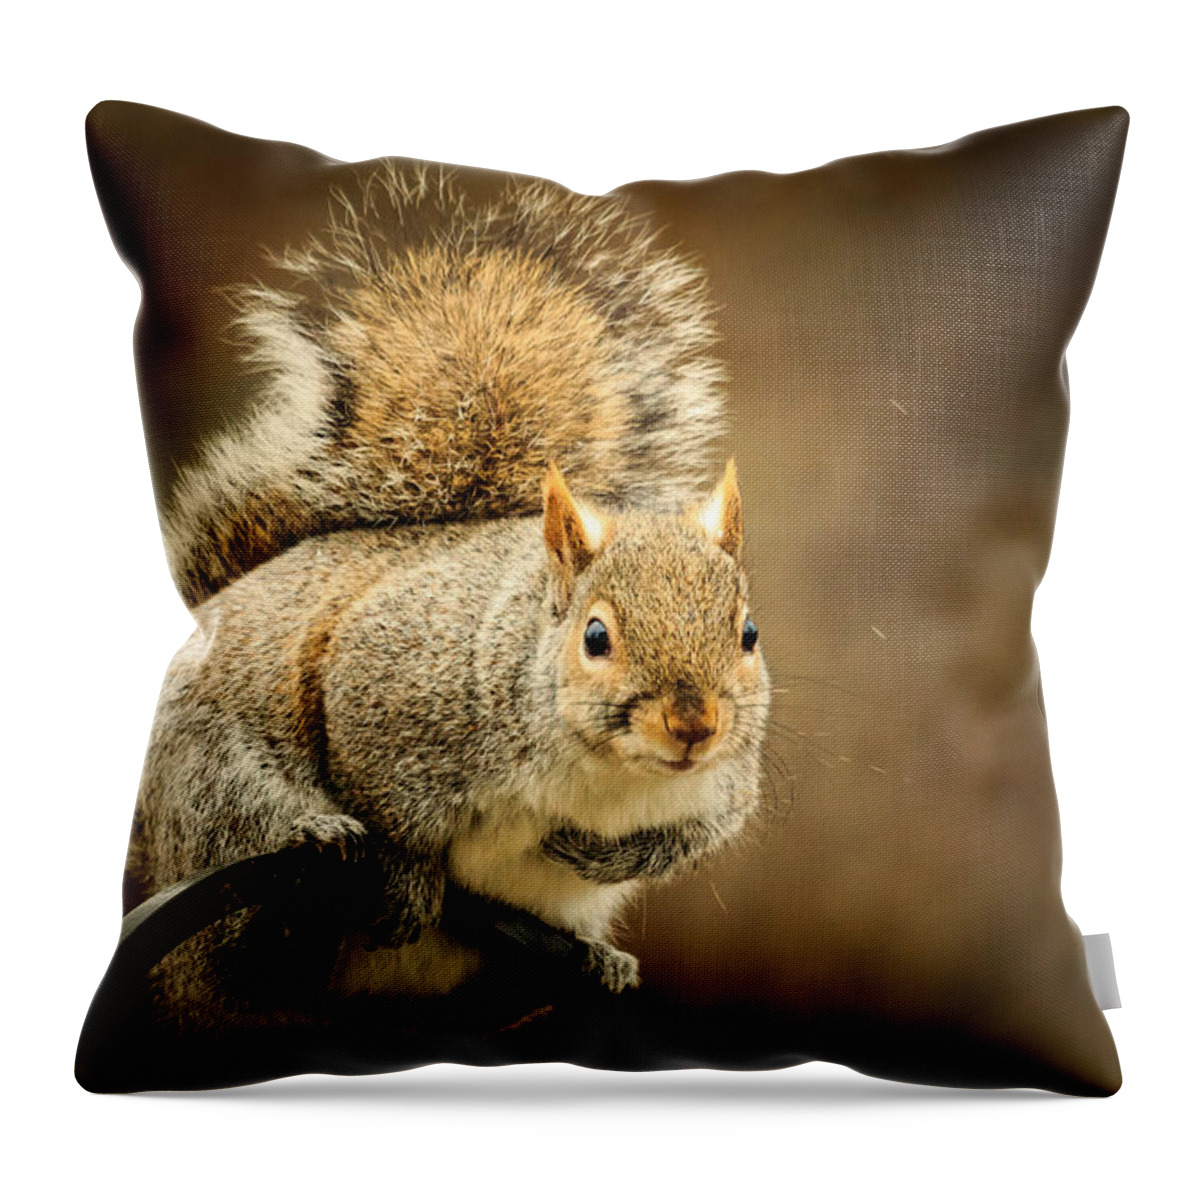 Backyard Throw Pillow featuring the photograph Squirrel Perch by Joni Eskridge